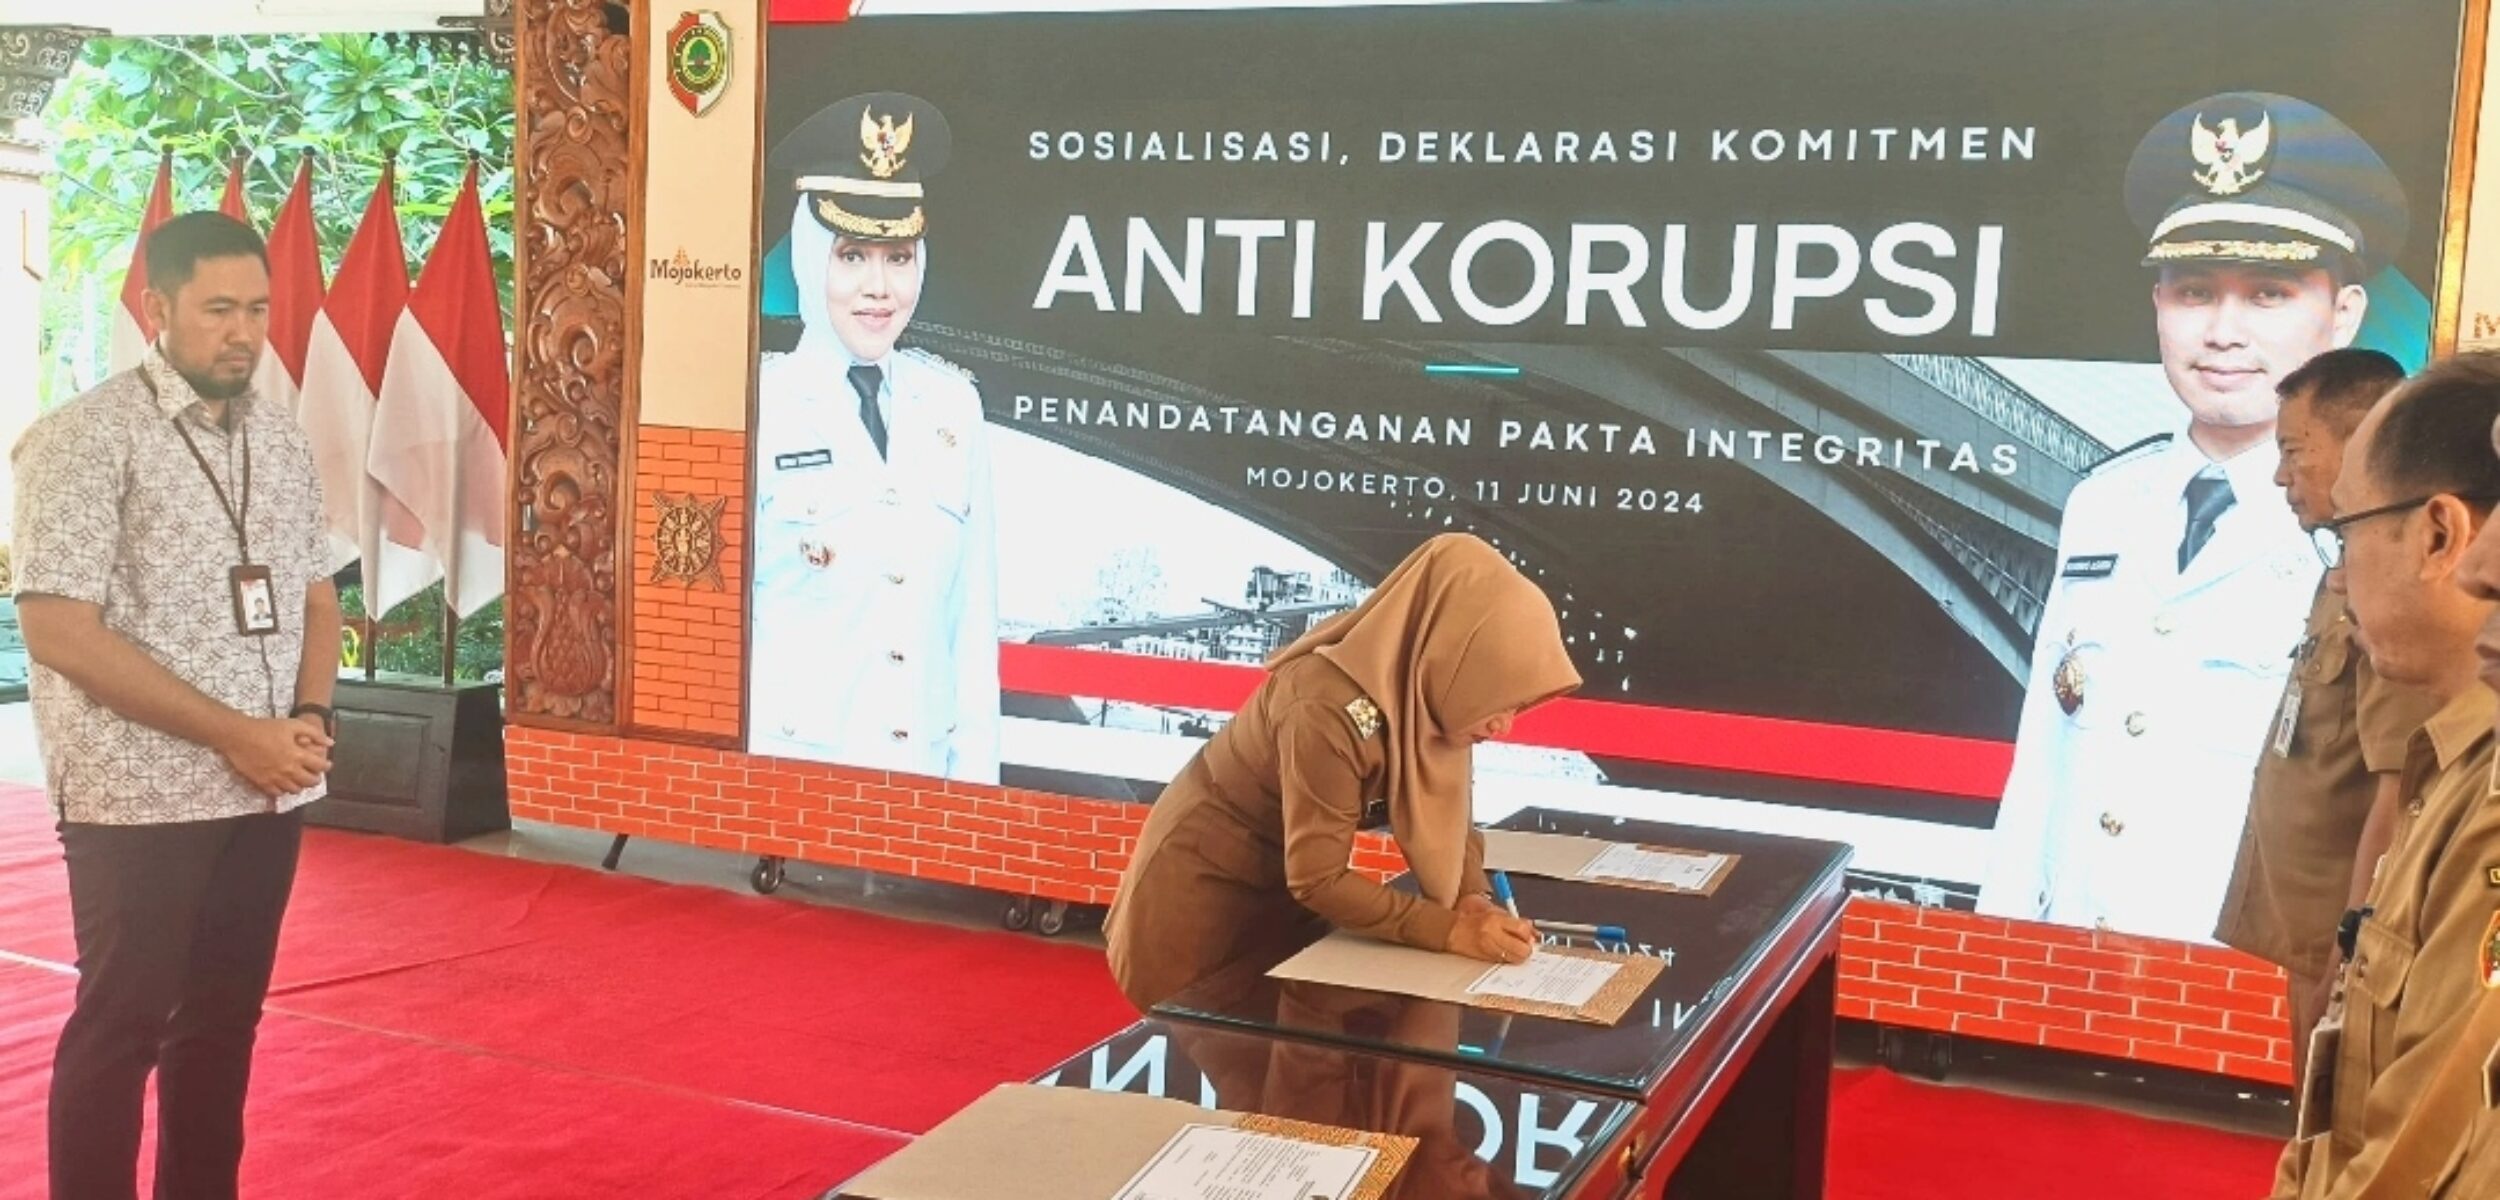 Pemkab Mojokerto Tandatangani Pakta Integritas Dihadapan KPK, Untuk Jalankan Pemerintahan yang Bersih